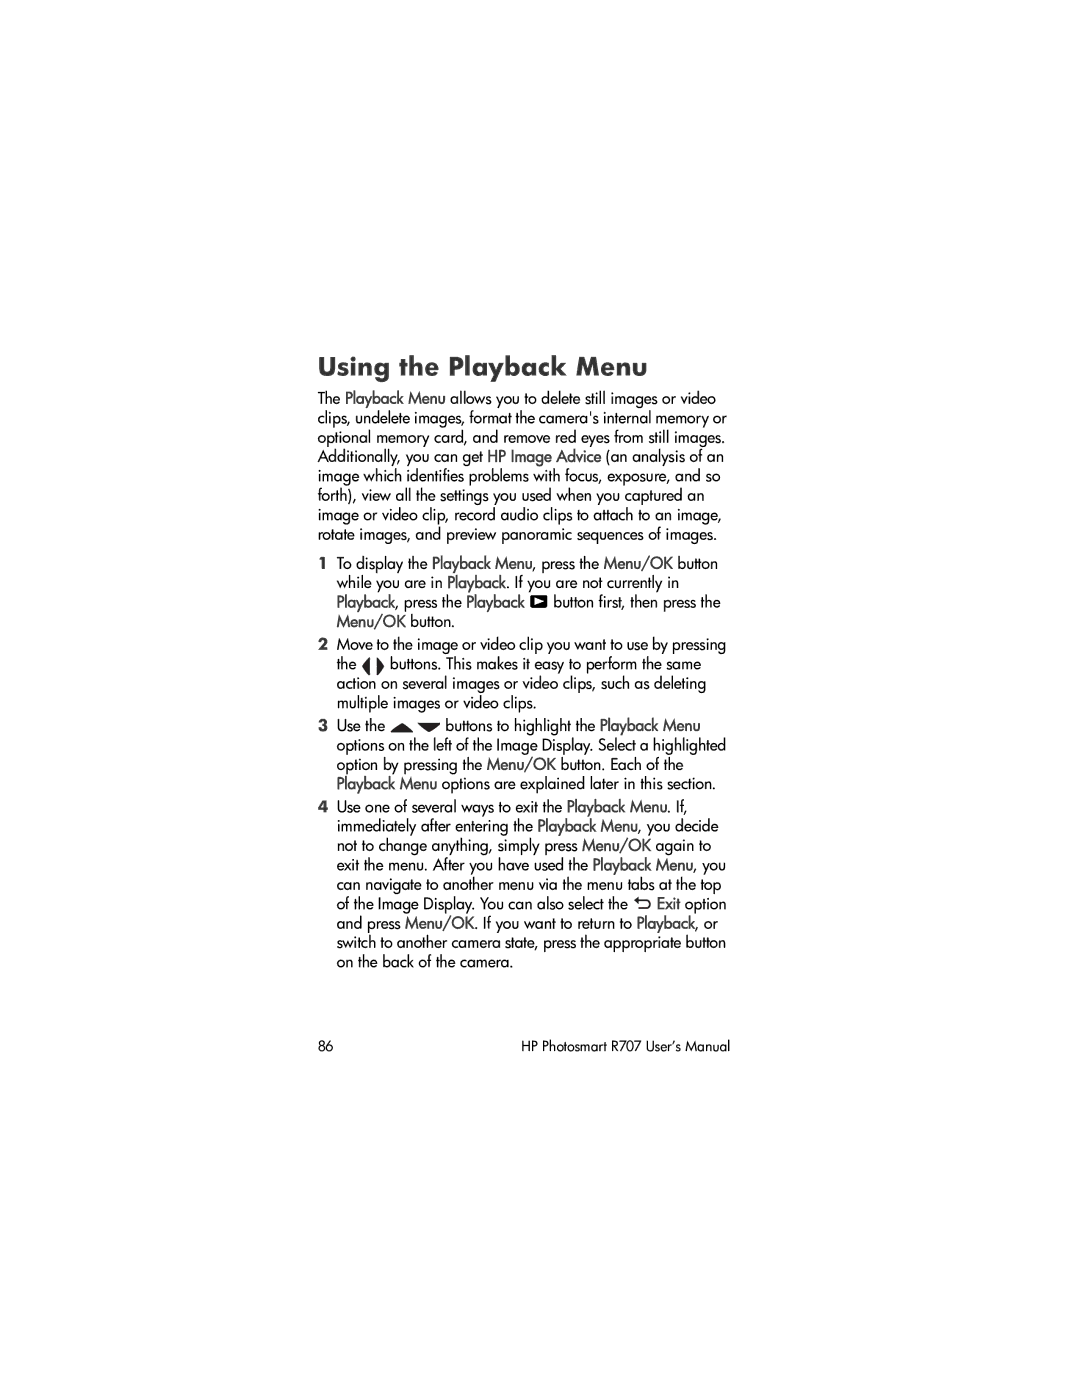 HP R707 manual Using the Playback Menu 